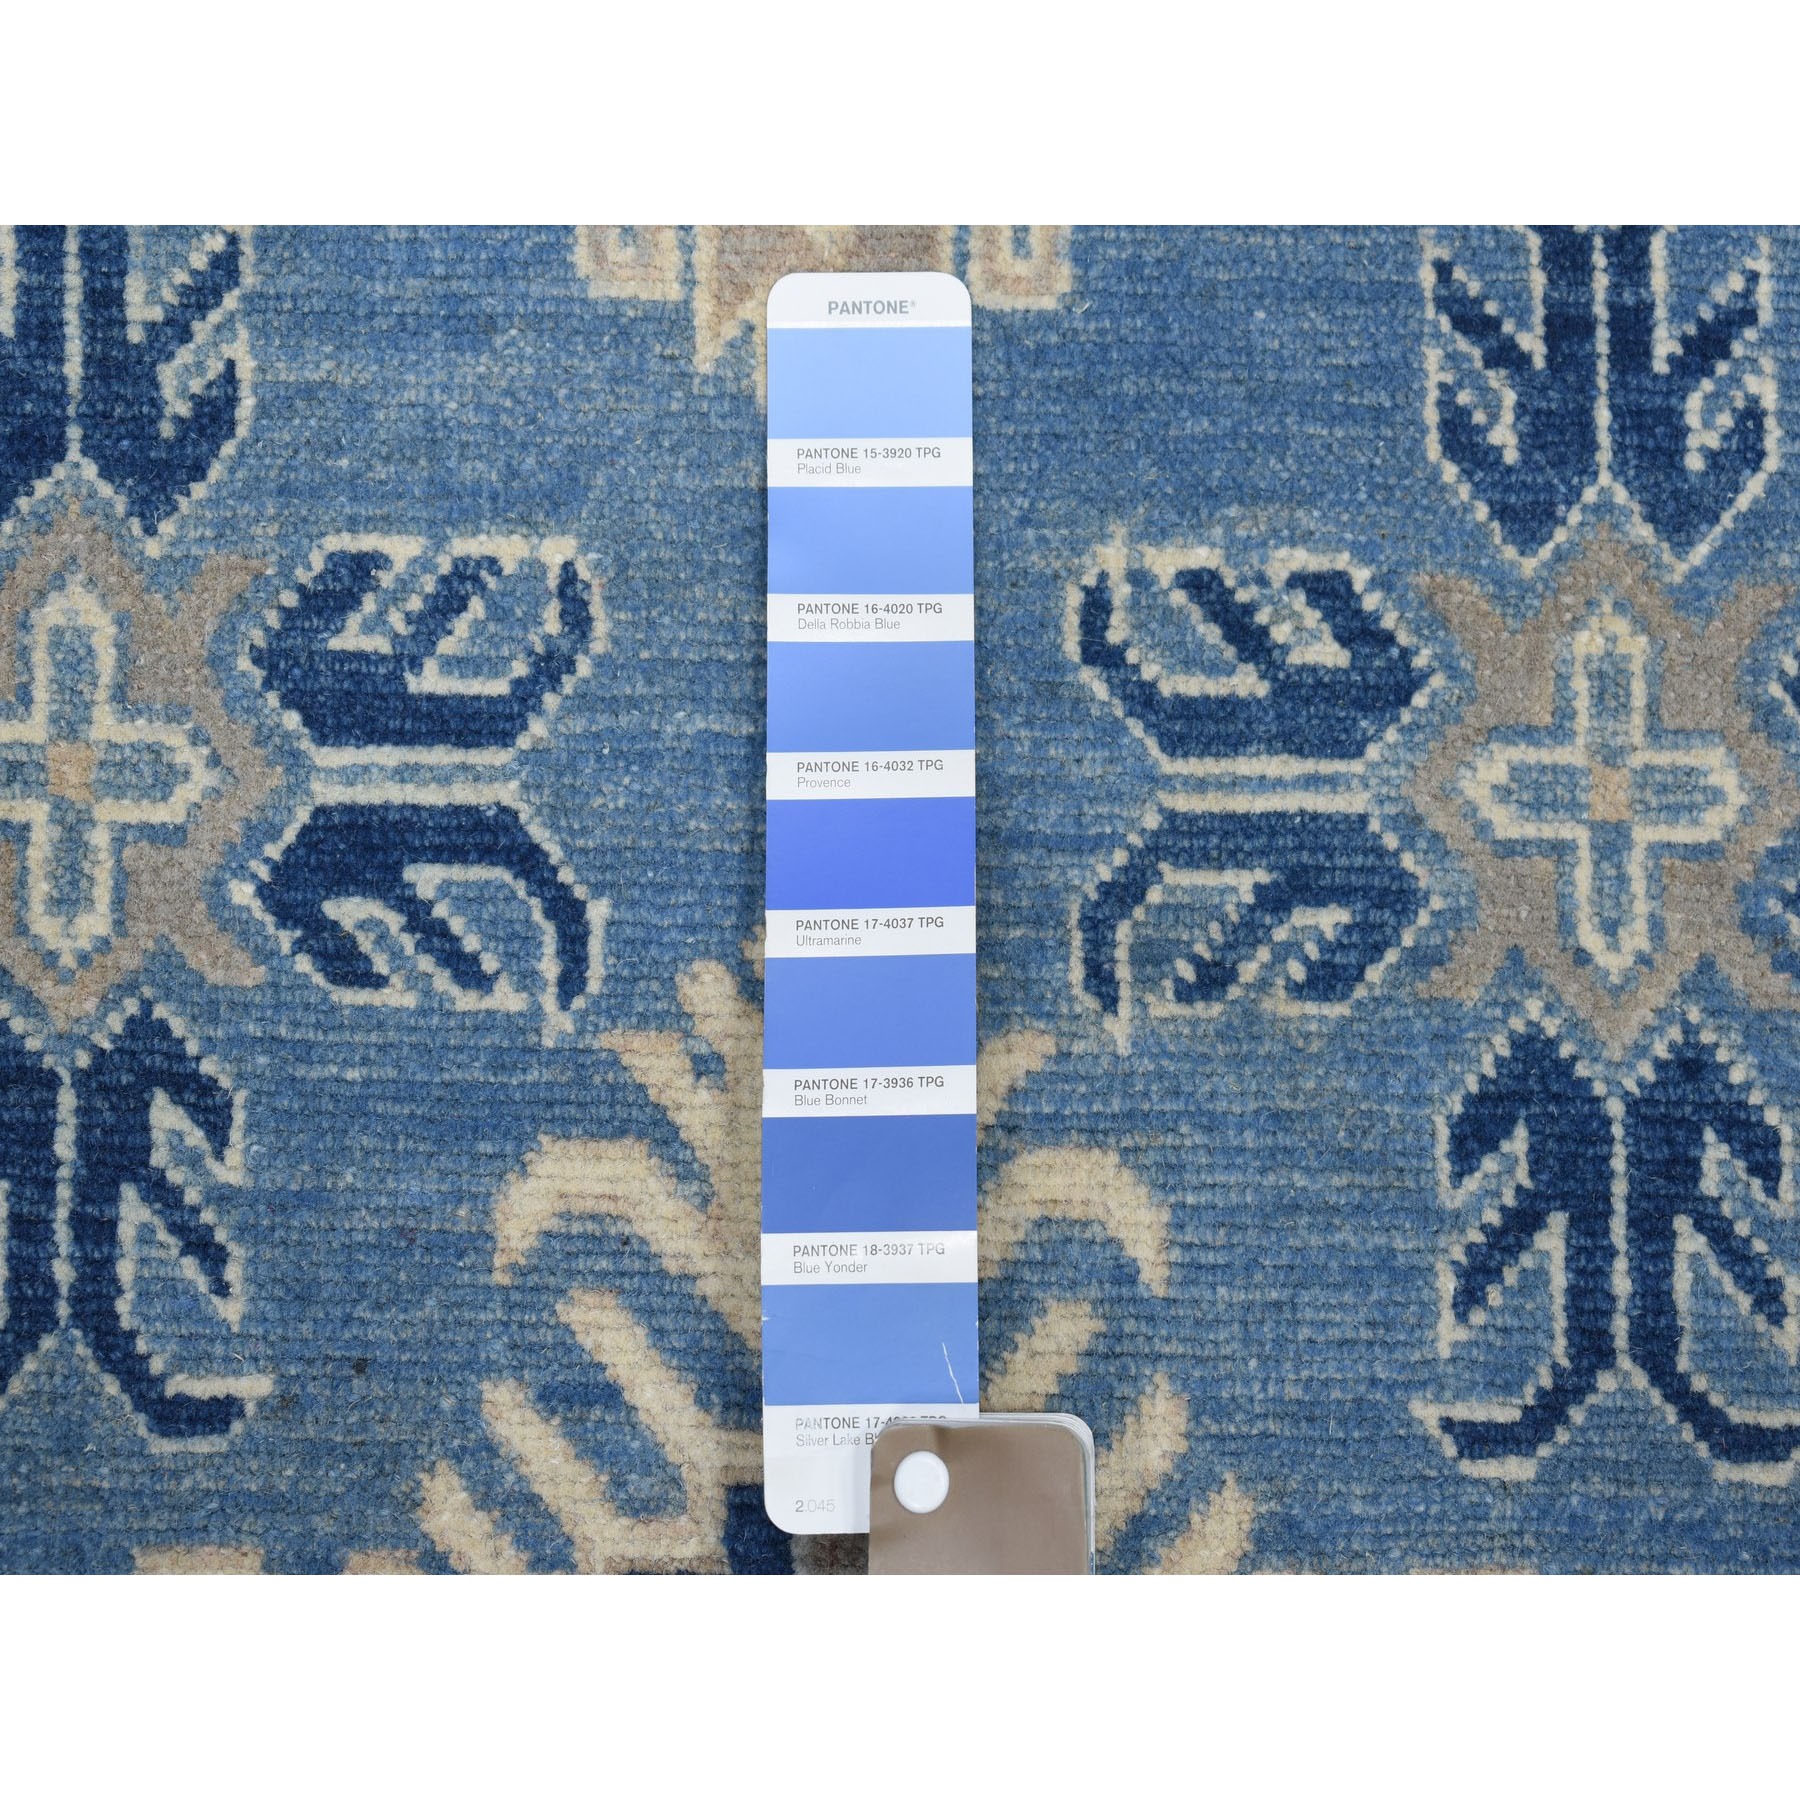 9-8 x13-5  Blue Vintage Look Kazak Geometric Design Pure Wool Hand Knotted Oriental Rug 